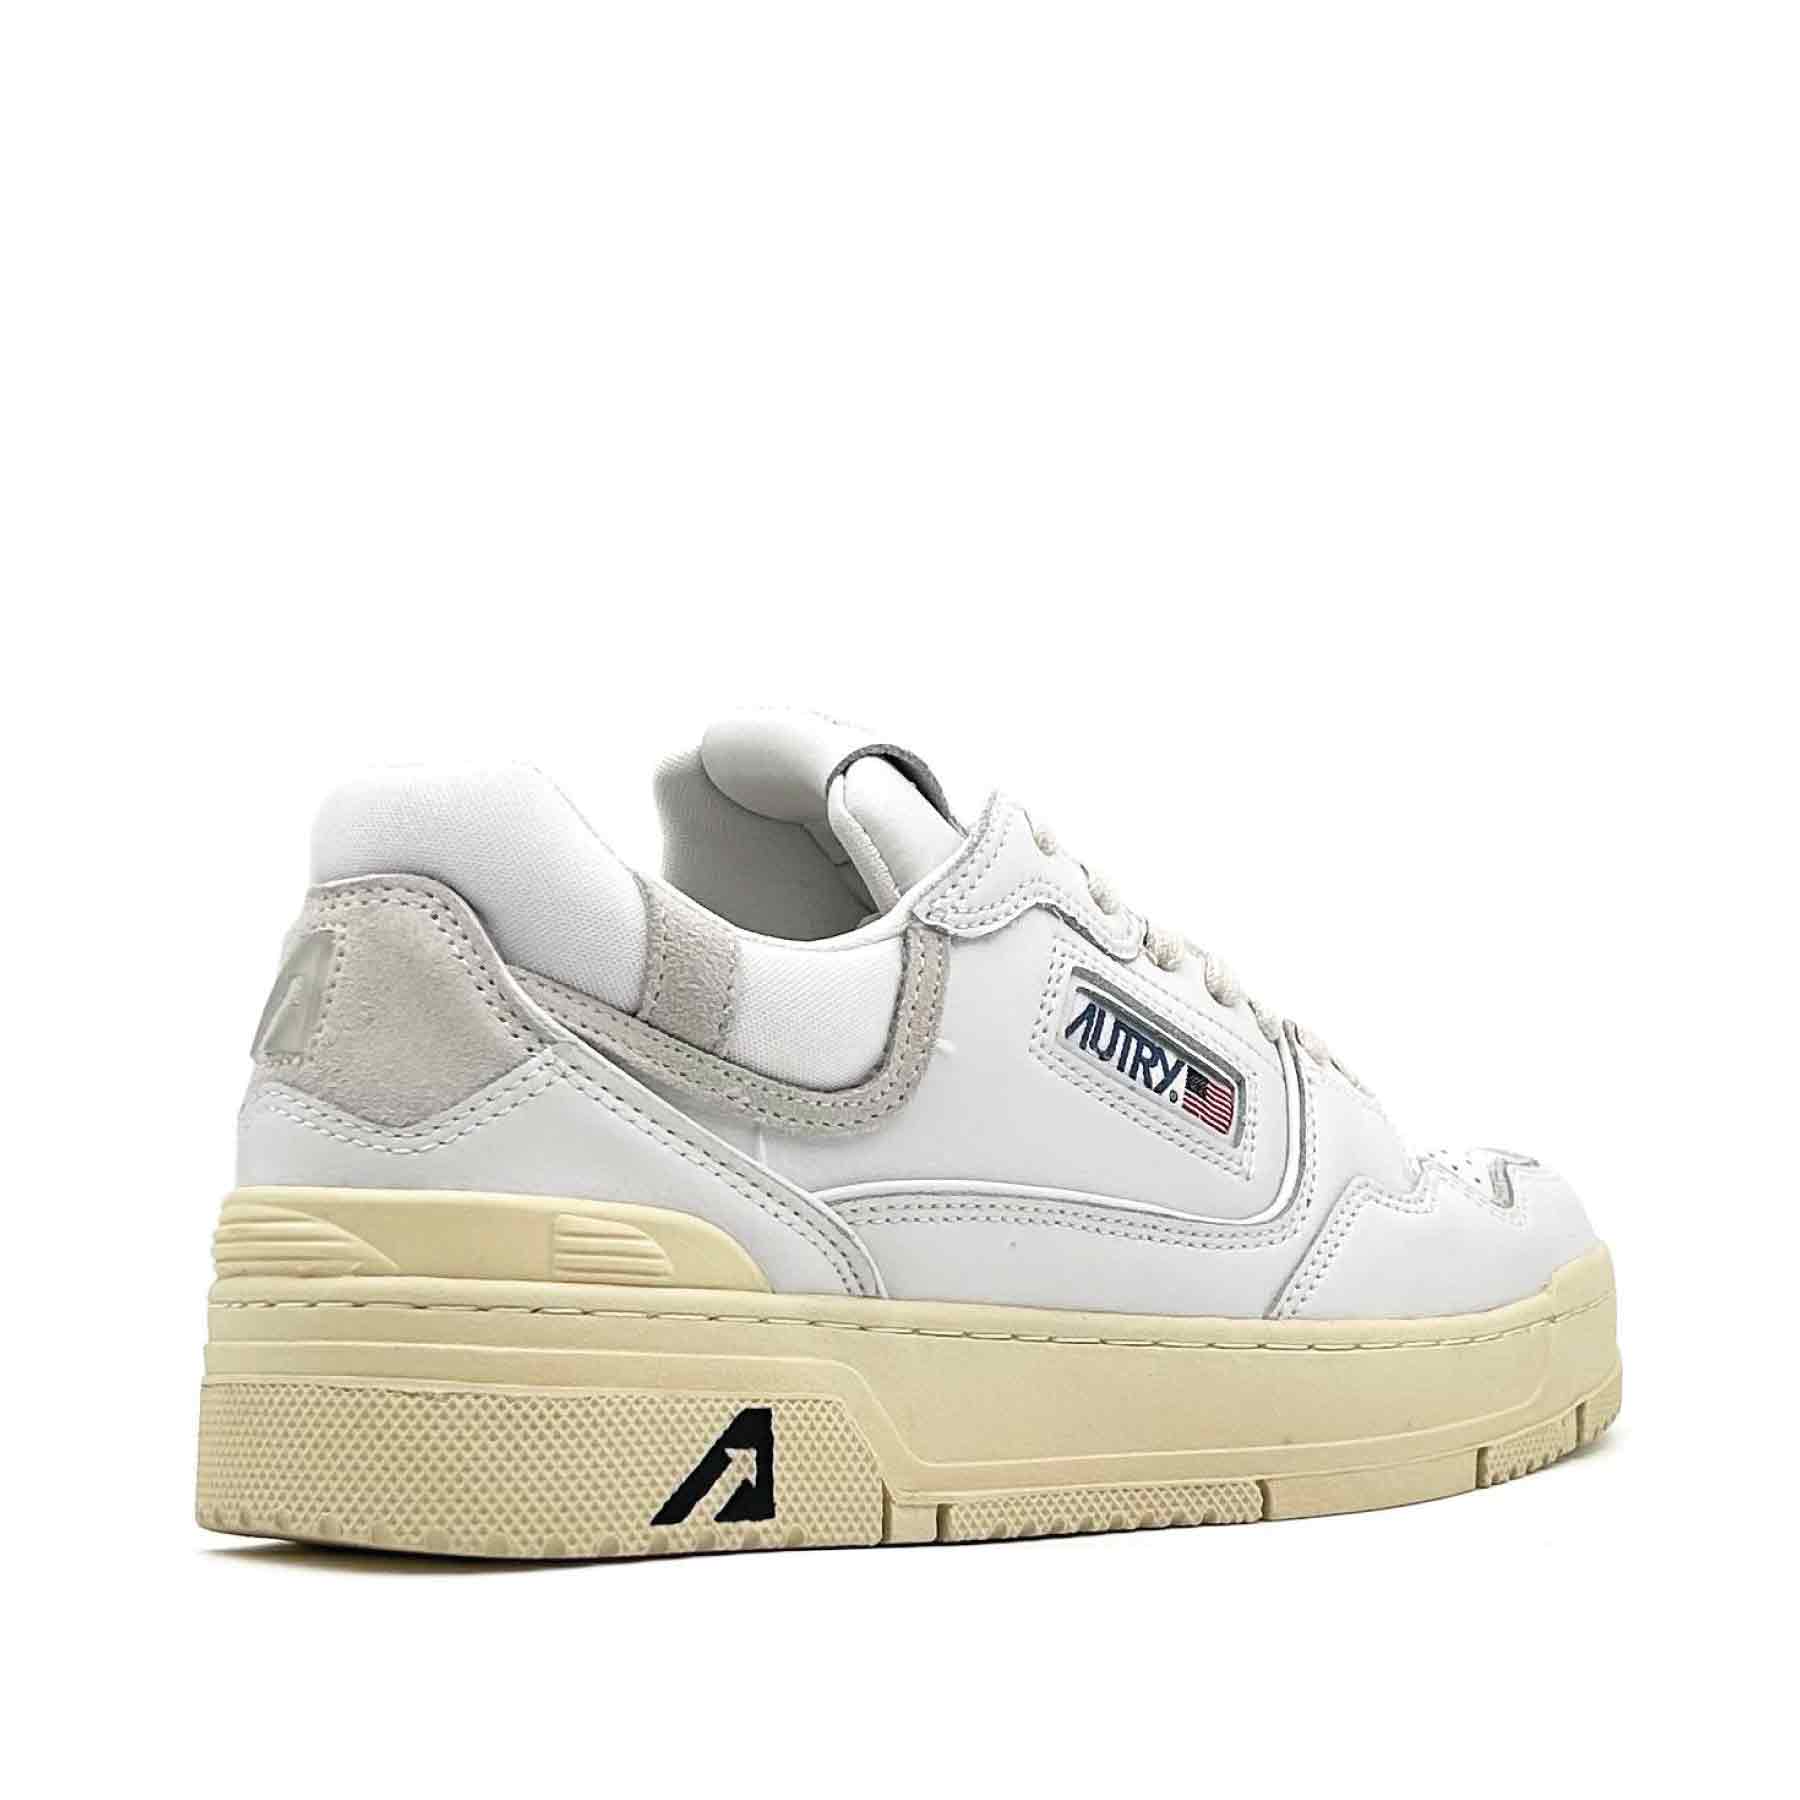 CLC Low Sneaker Man Multi / Mat White